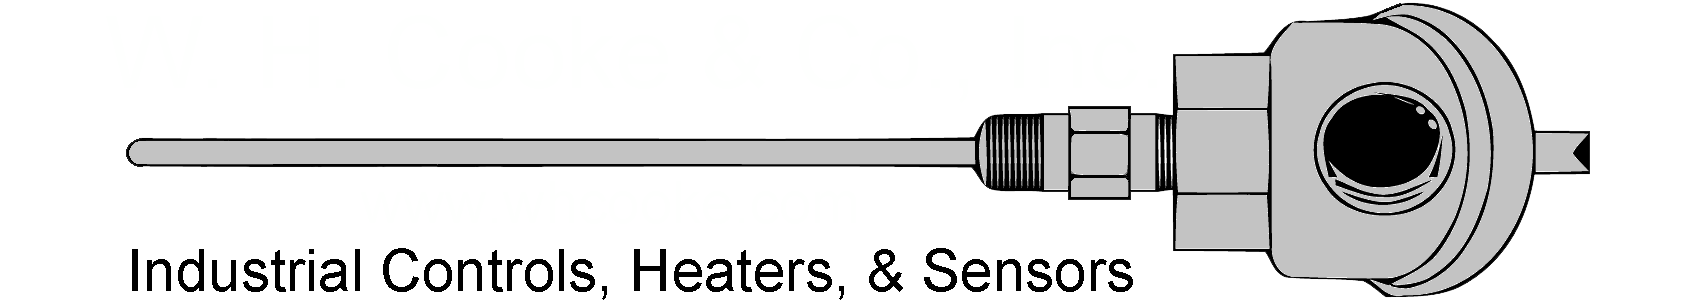 cooke_logo_redesign_white